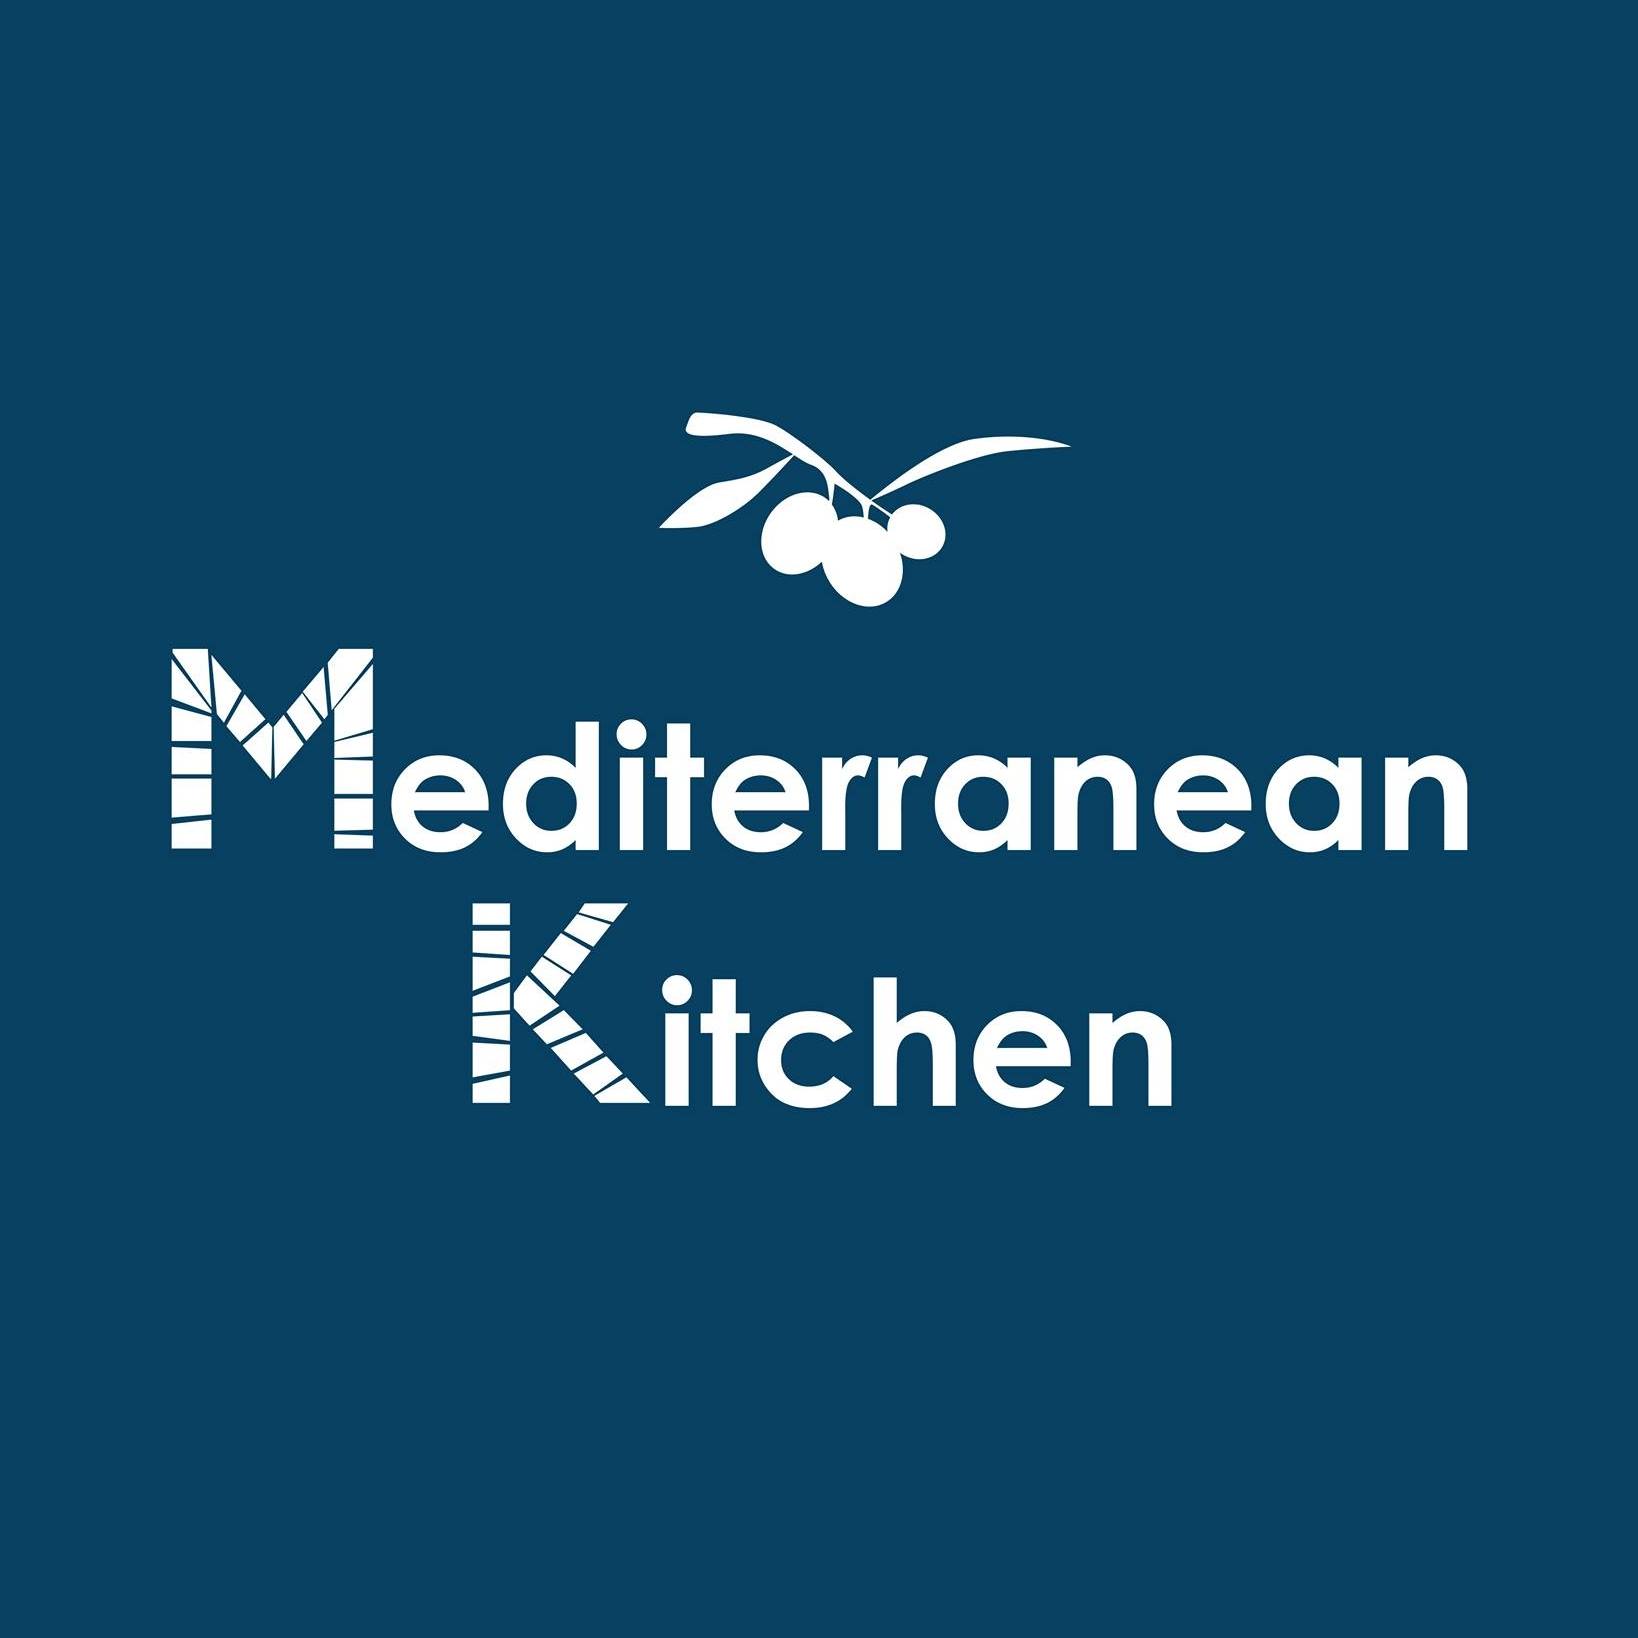 Mediterranean Kitchen - Coming Soon in UAE